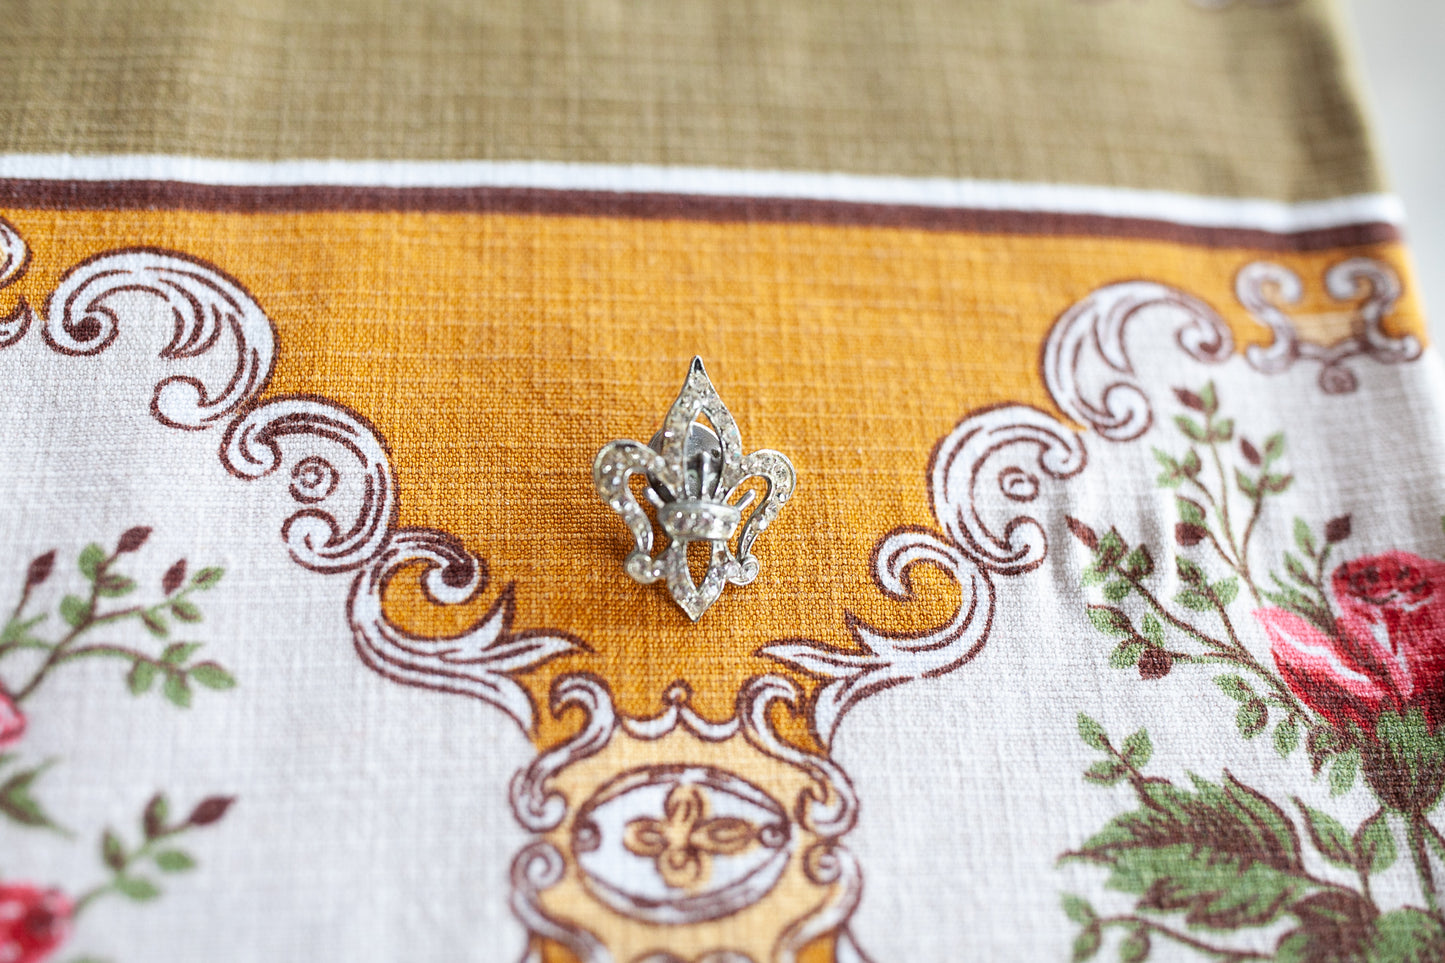 Fleur De Lis Lapel Pin - Vintage Pin -Brooch